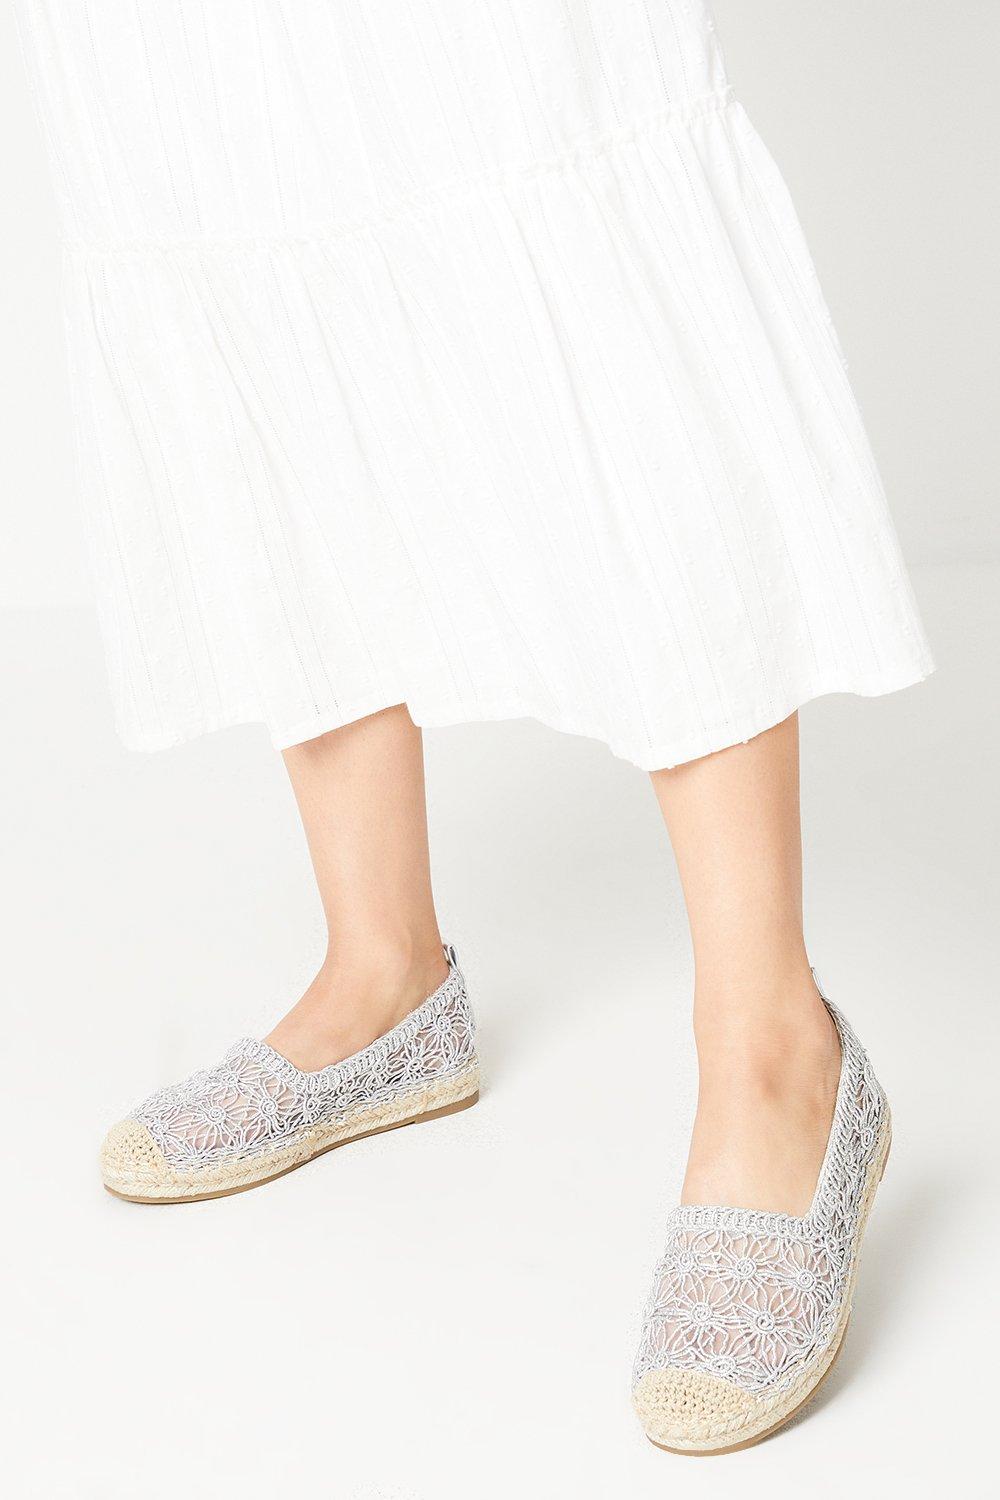 Womens Good For The Sole: Ellie Comfort Crochet Espadrille Flat Shoes